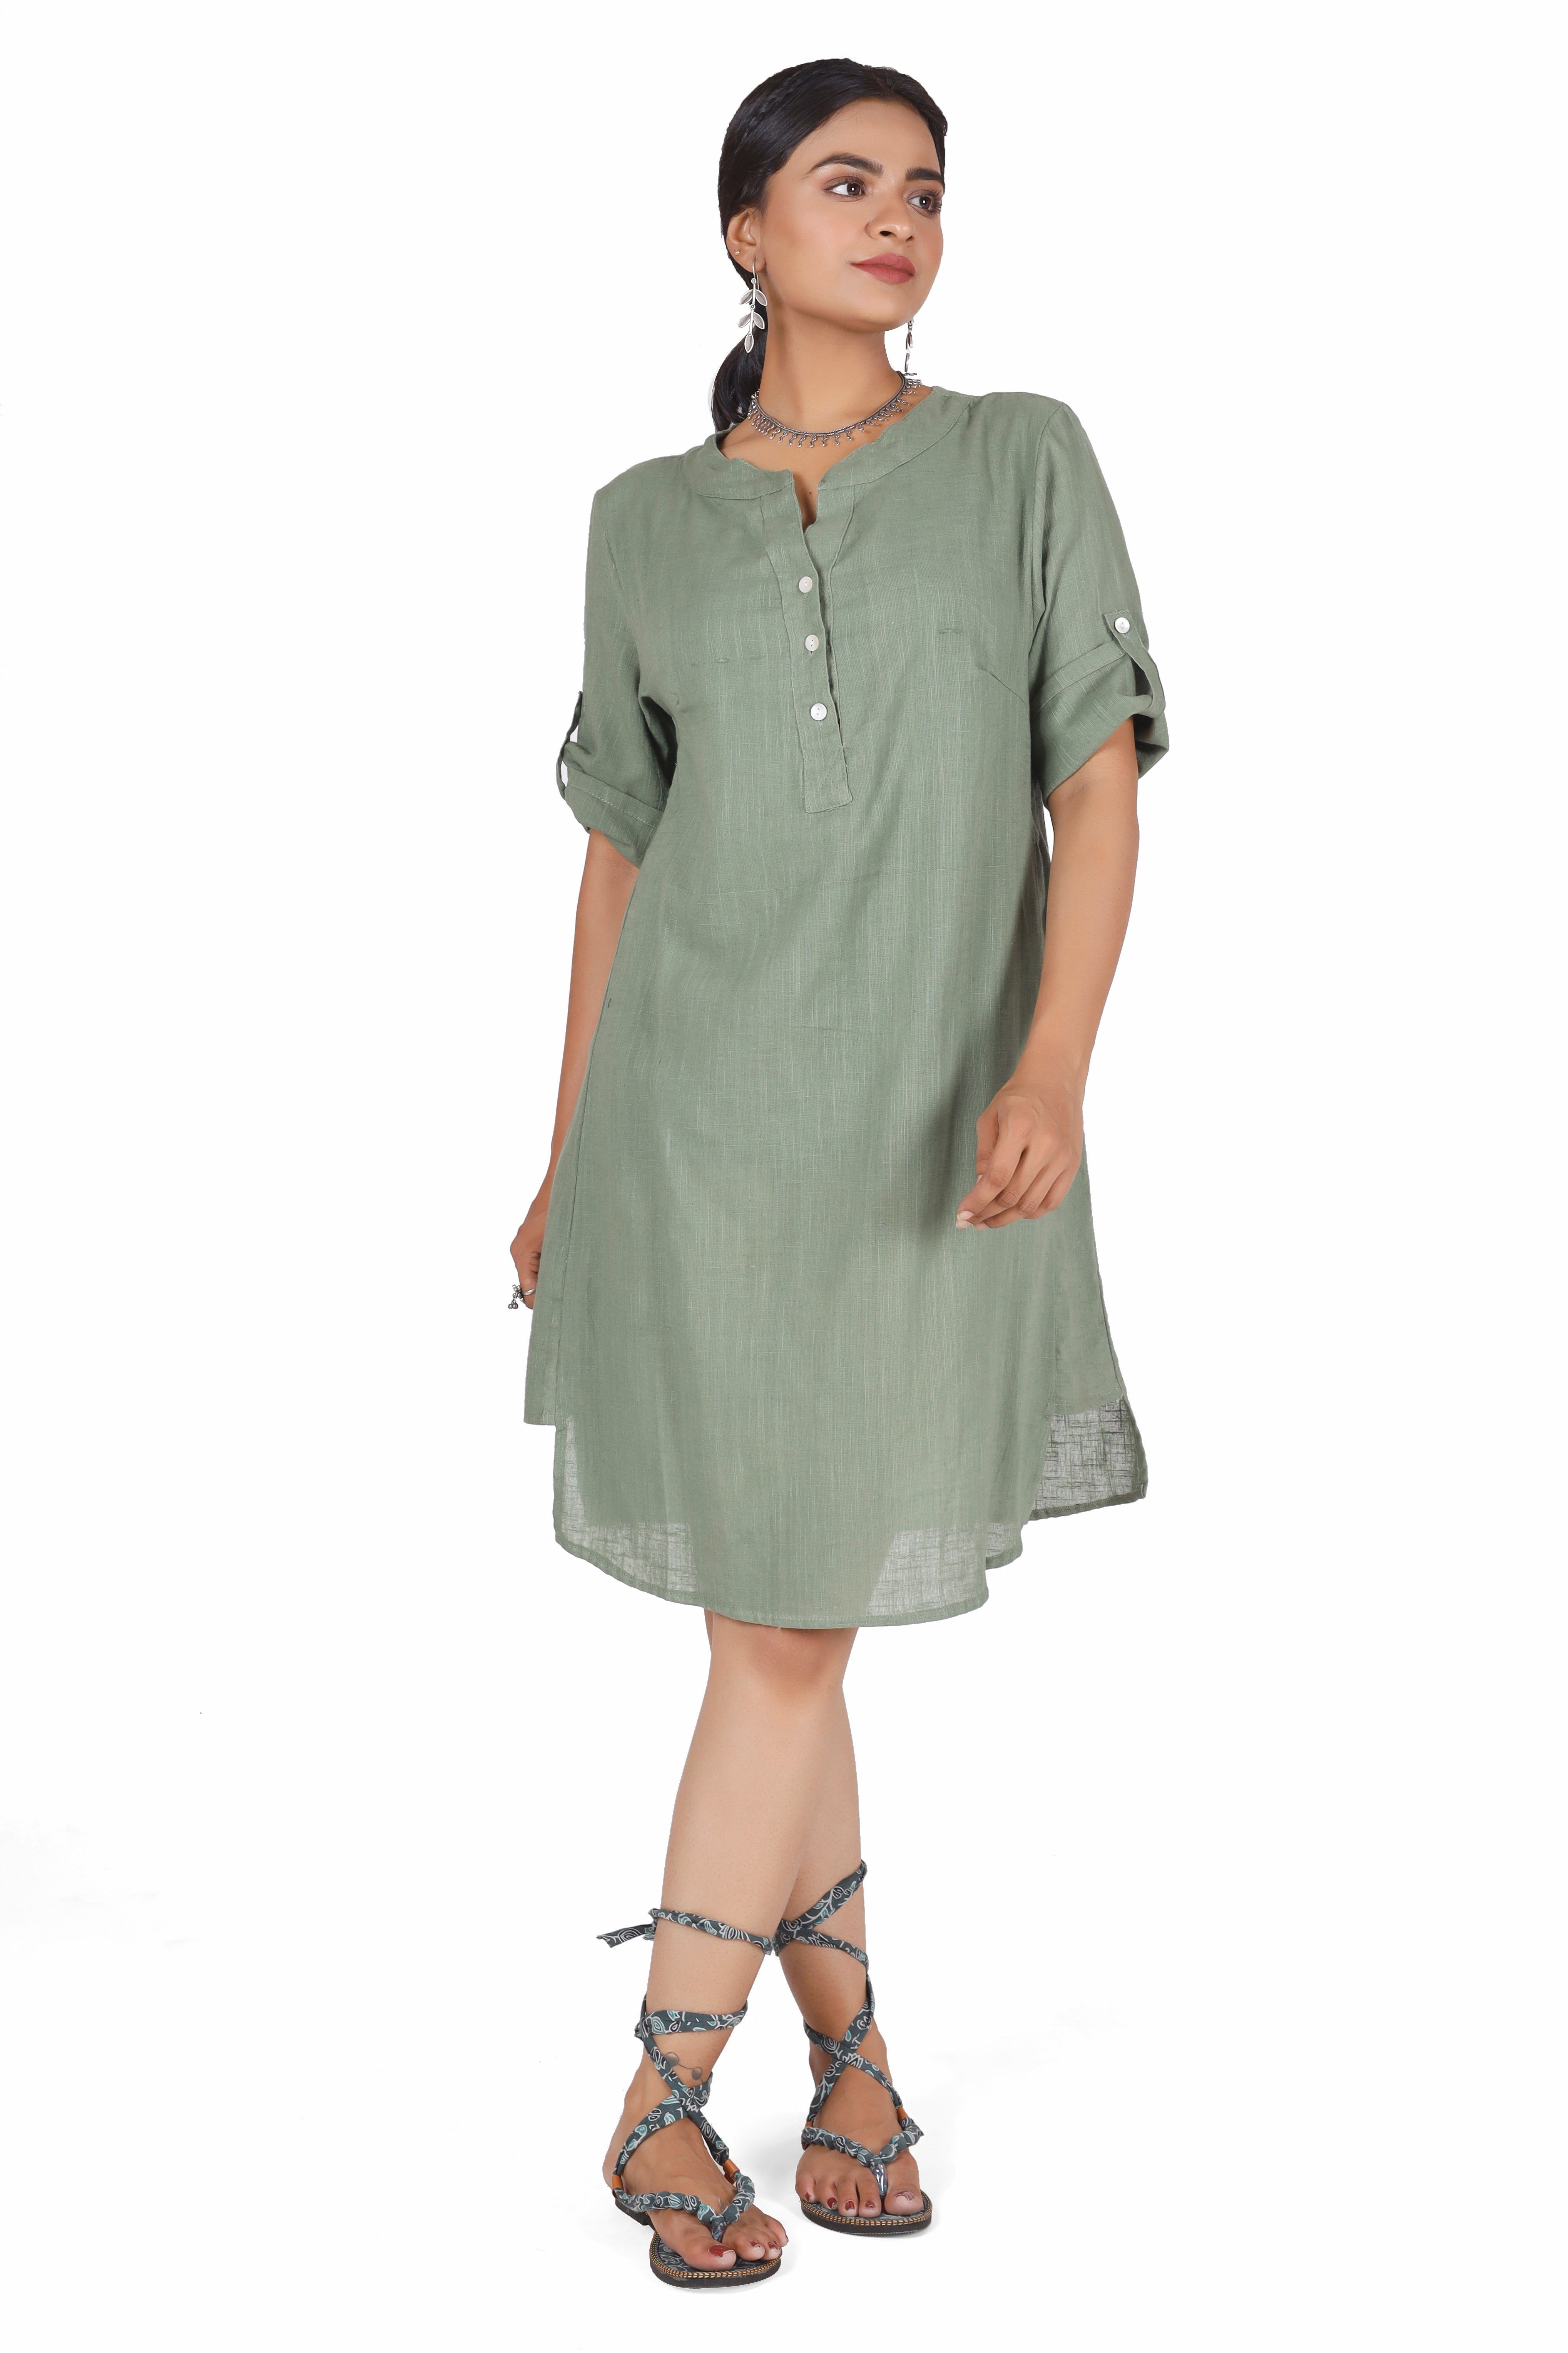 Guru-Shop Longbluse Lange Baumwoll Blusentunika, Bekleidung olivgrün Hemd-Tunika alternative 